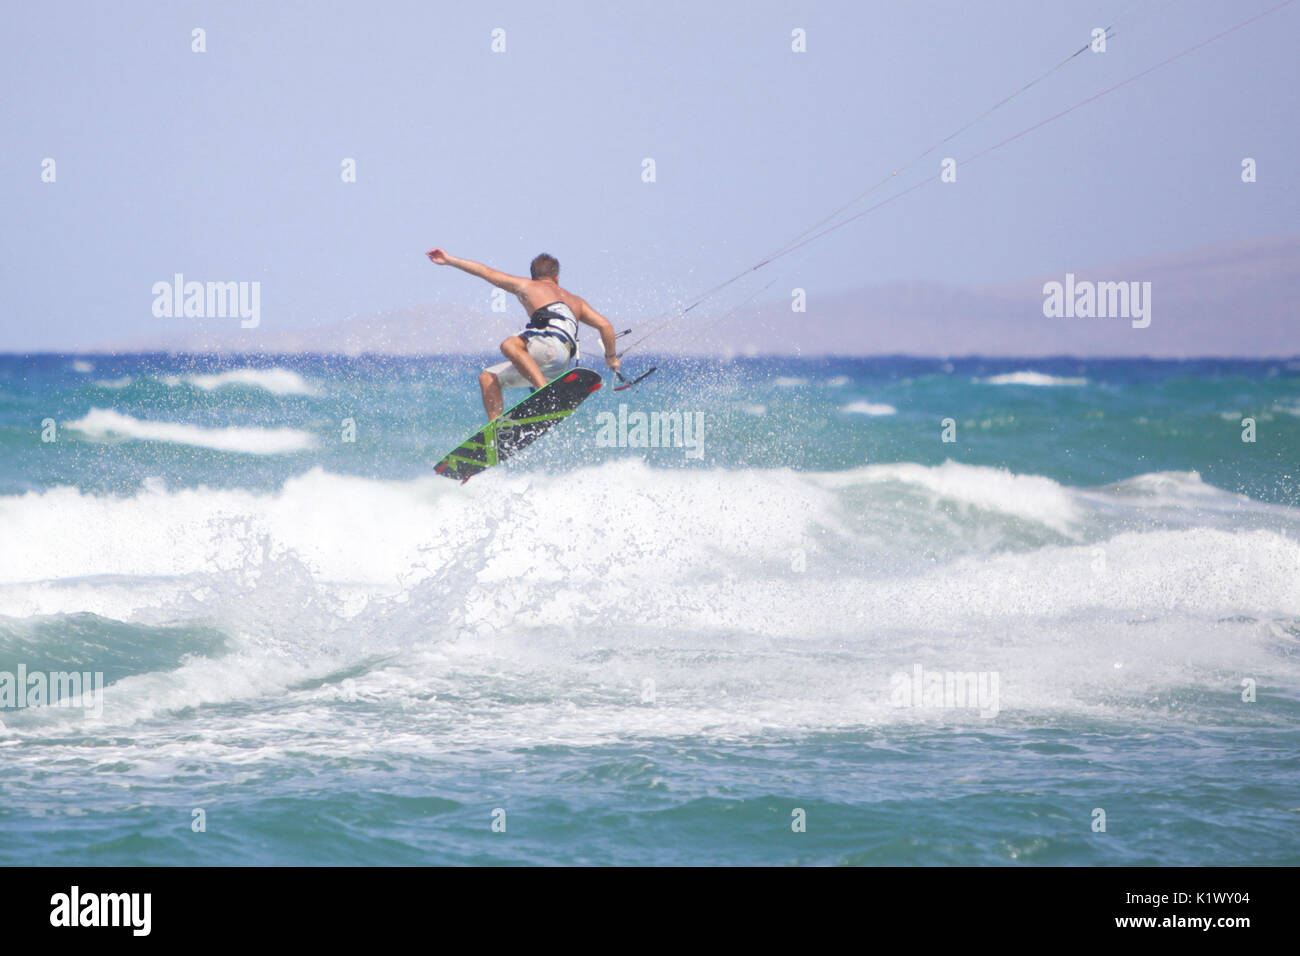 Europa, Greece, Kreta, Kitesurfer jumping at Greece Stock Photo